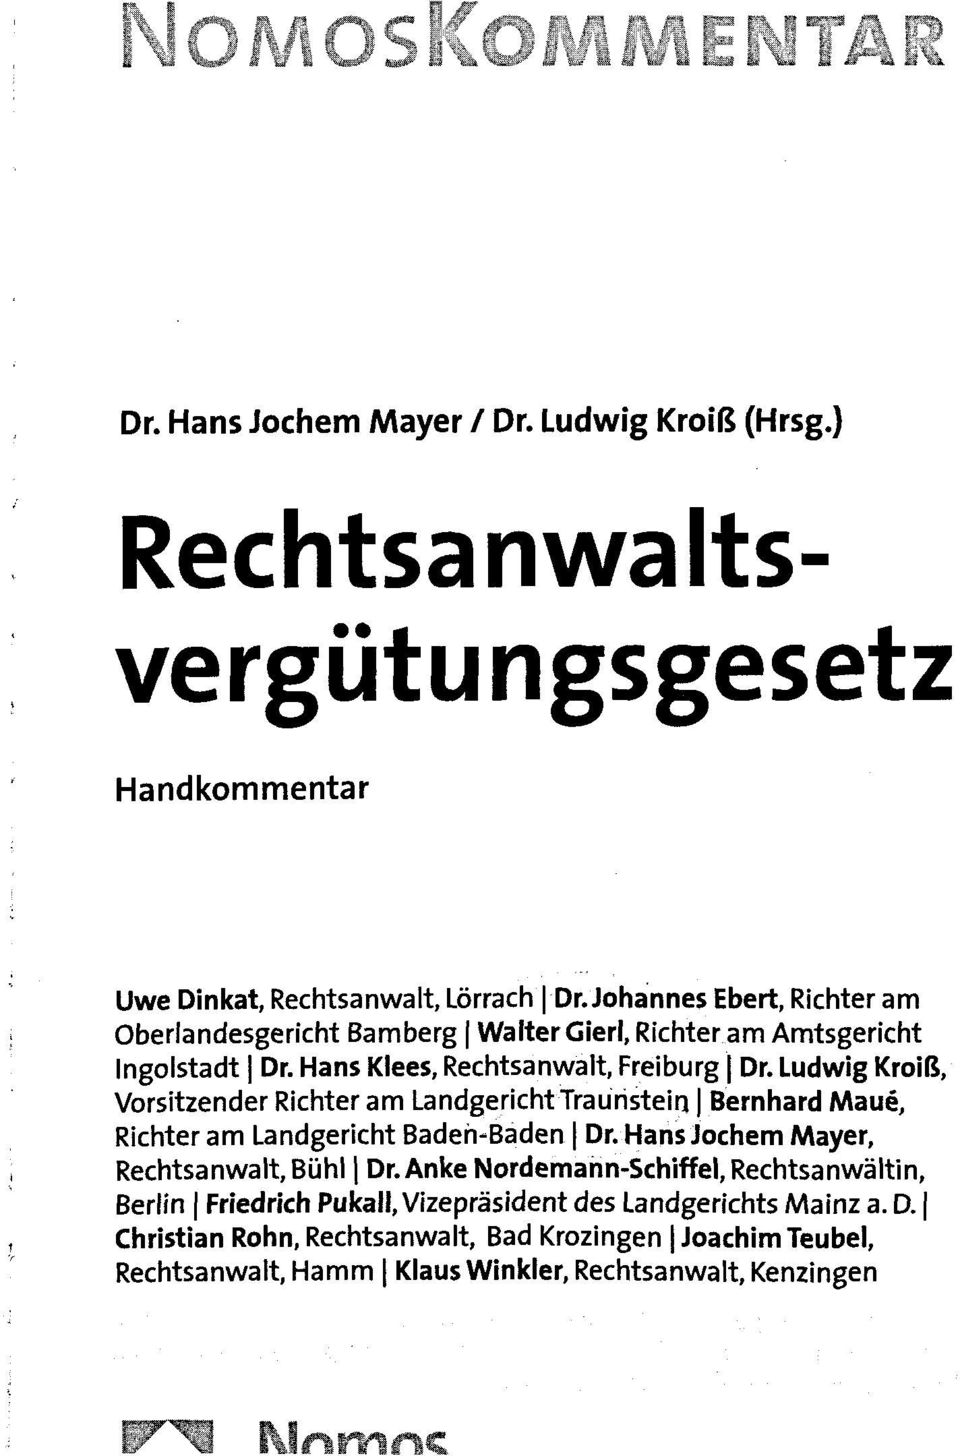 Ludwig Kroiß, Vorsitzender Richter am Landgericht Trauristein. Bernhard Maue, Richter am Landgericht Baden-Baden Dr. Hans Jochem Mayer, Rechtsanwalt, Bühl Dr.